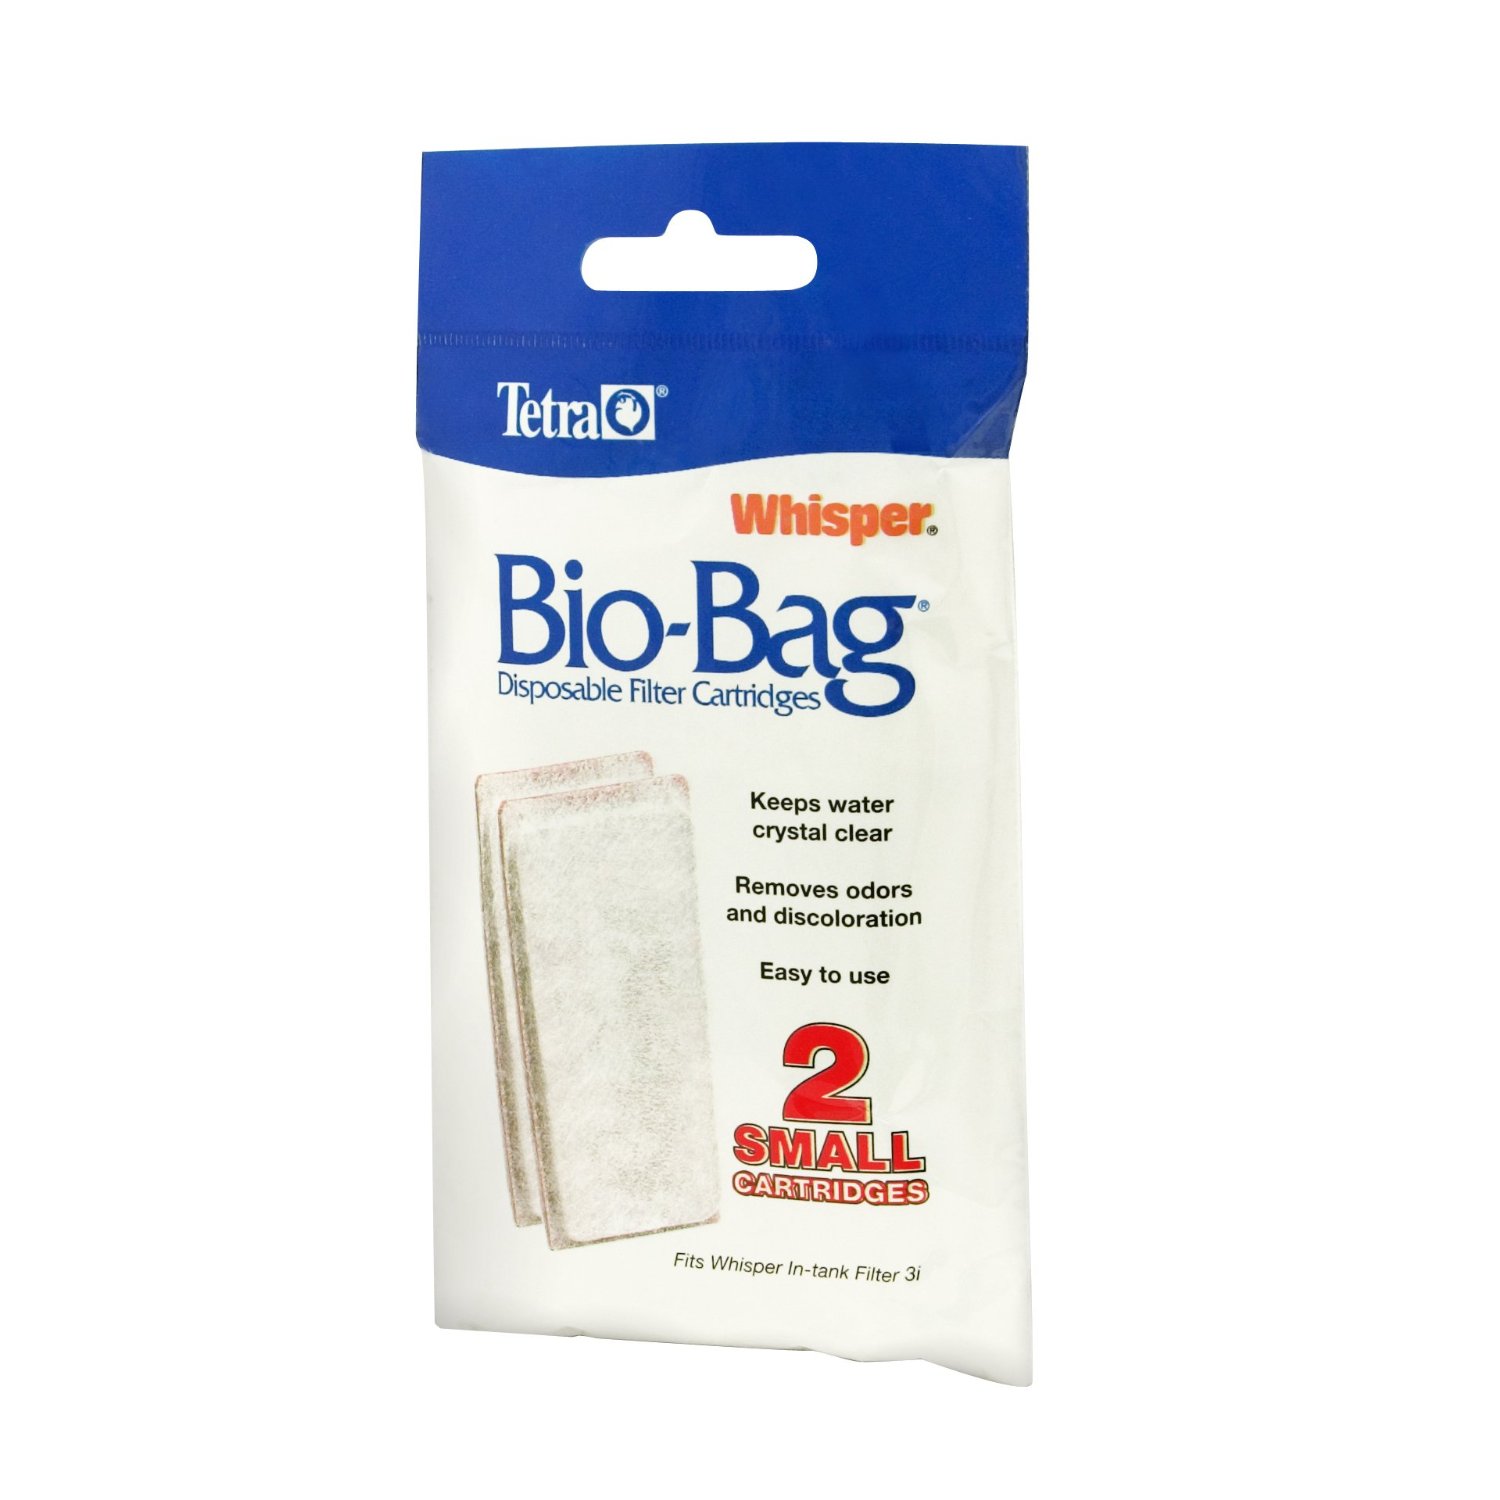 Tetra Whisper Assembled Bio-Bag Filter Cartridges, Small (2 pack)